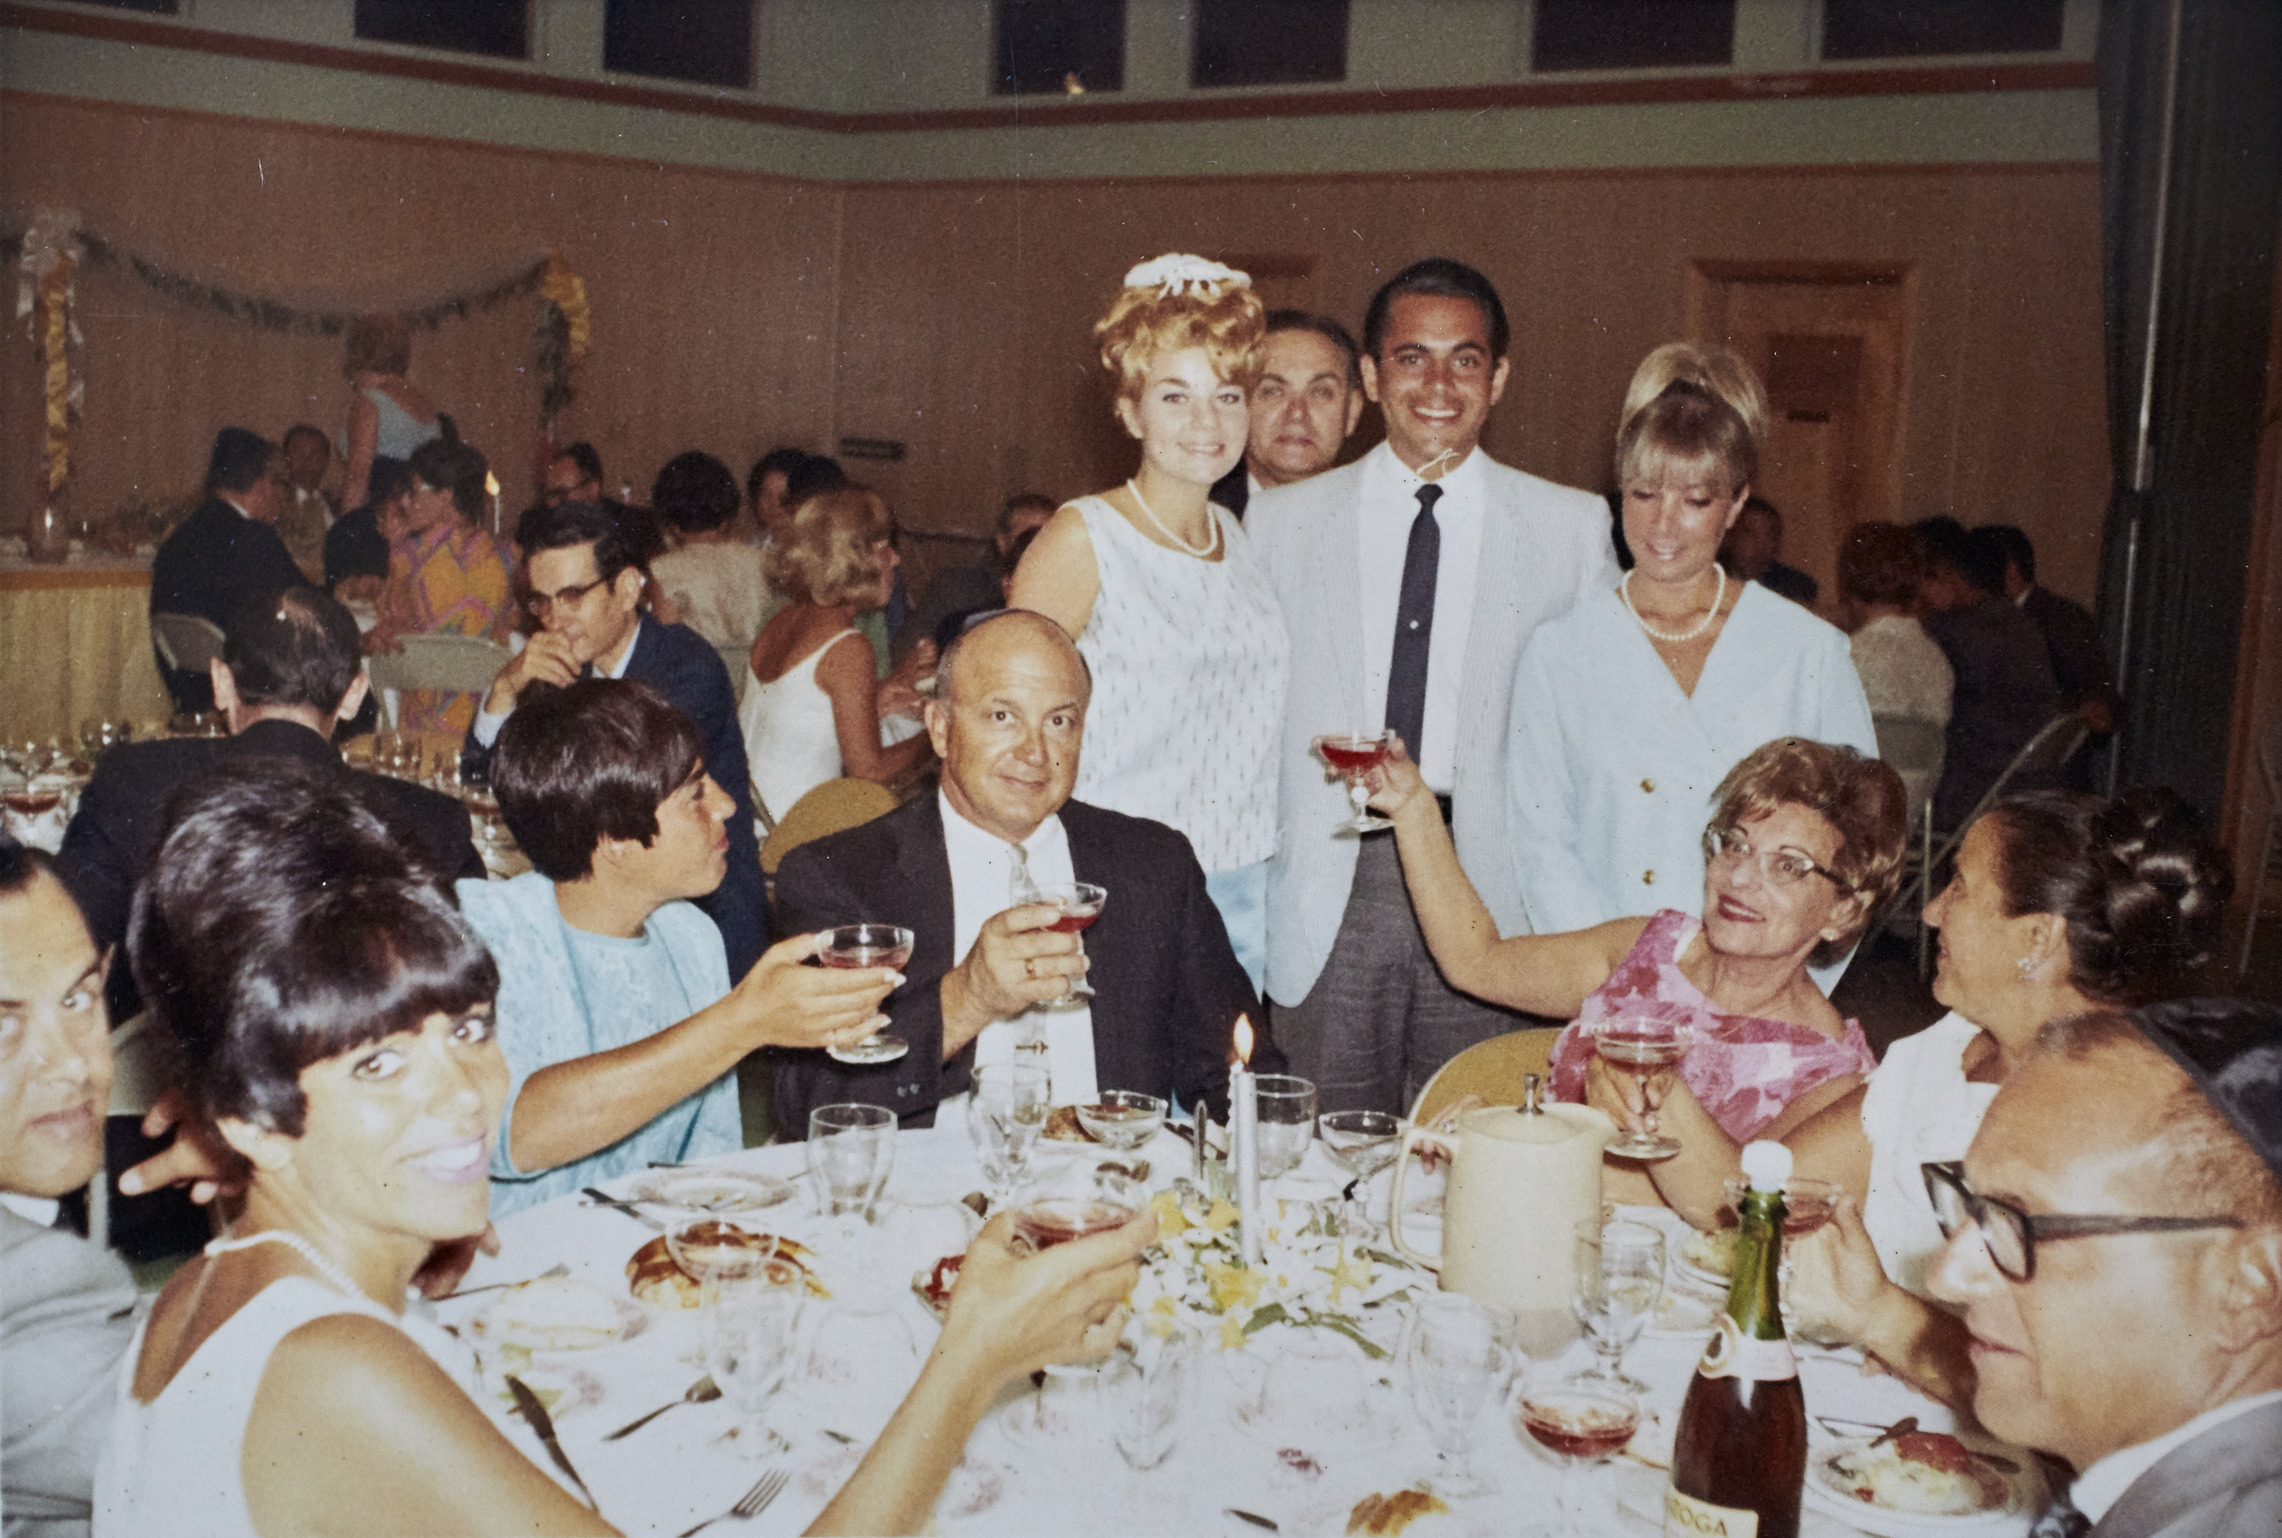 Photograph of wedding reception for David and Iris Torjman, August 1966